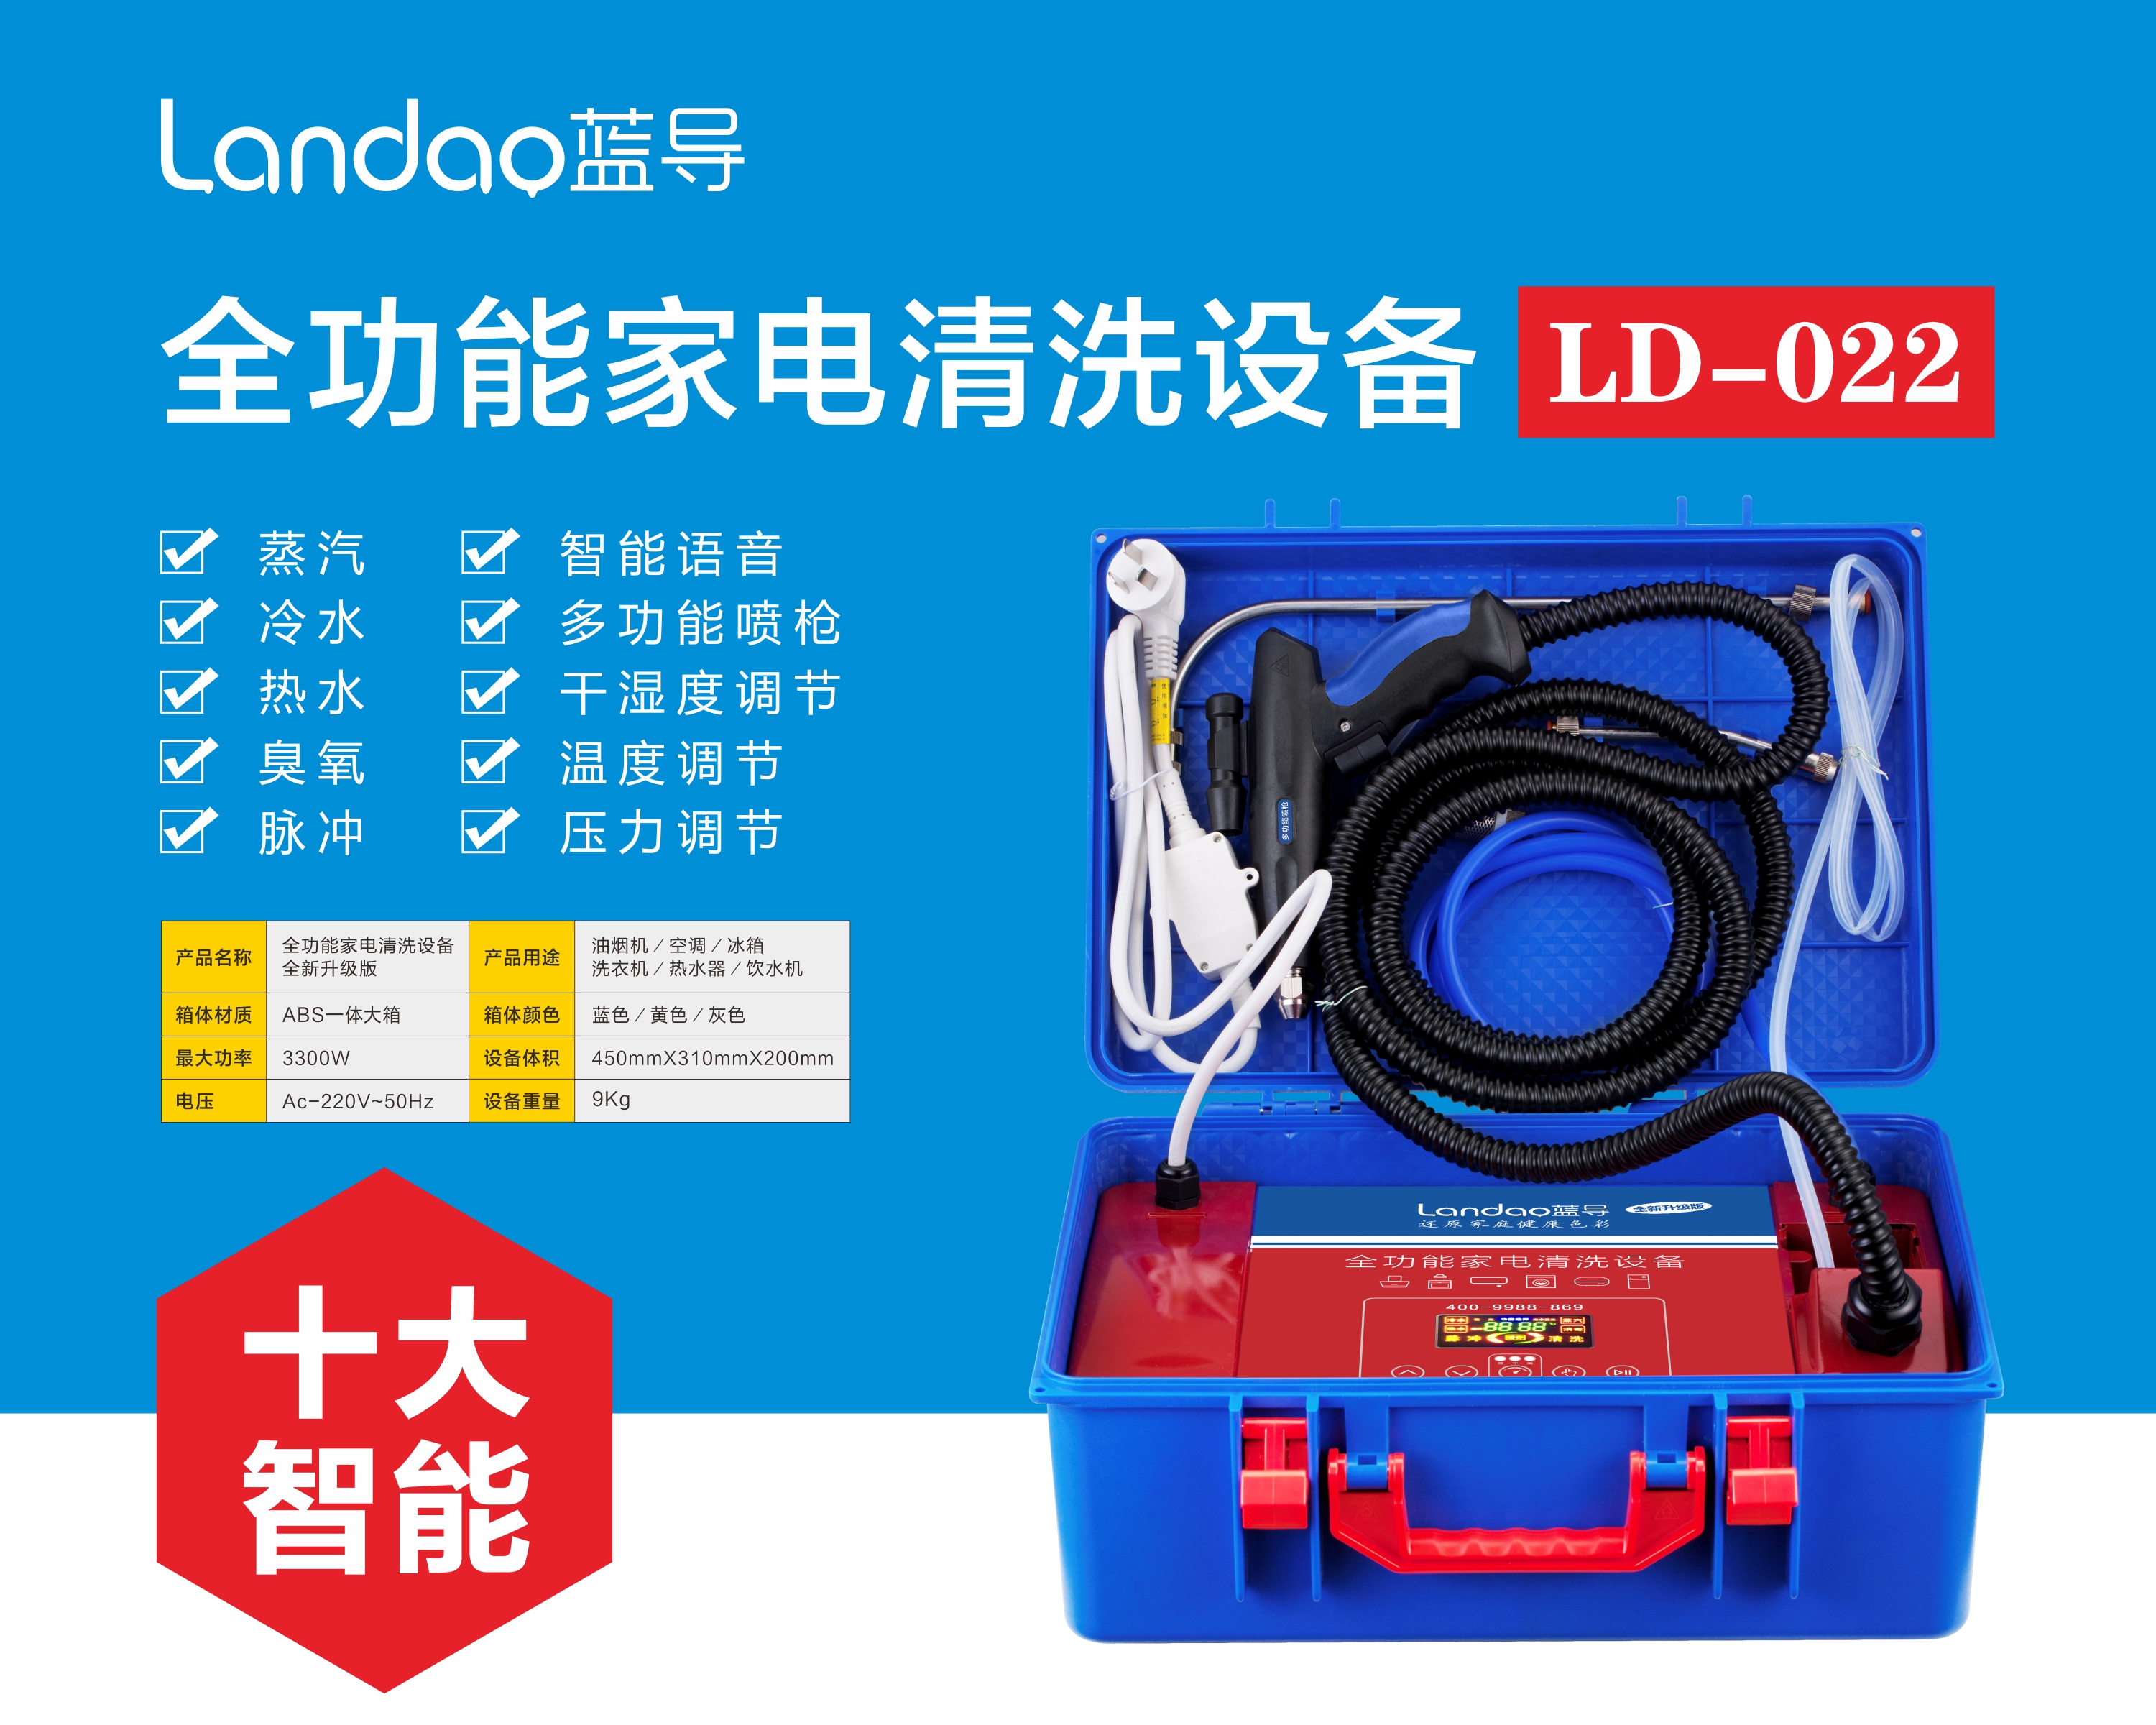 LD-022全功能家电清洗设备全新升级版